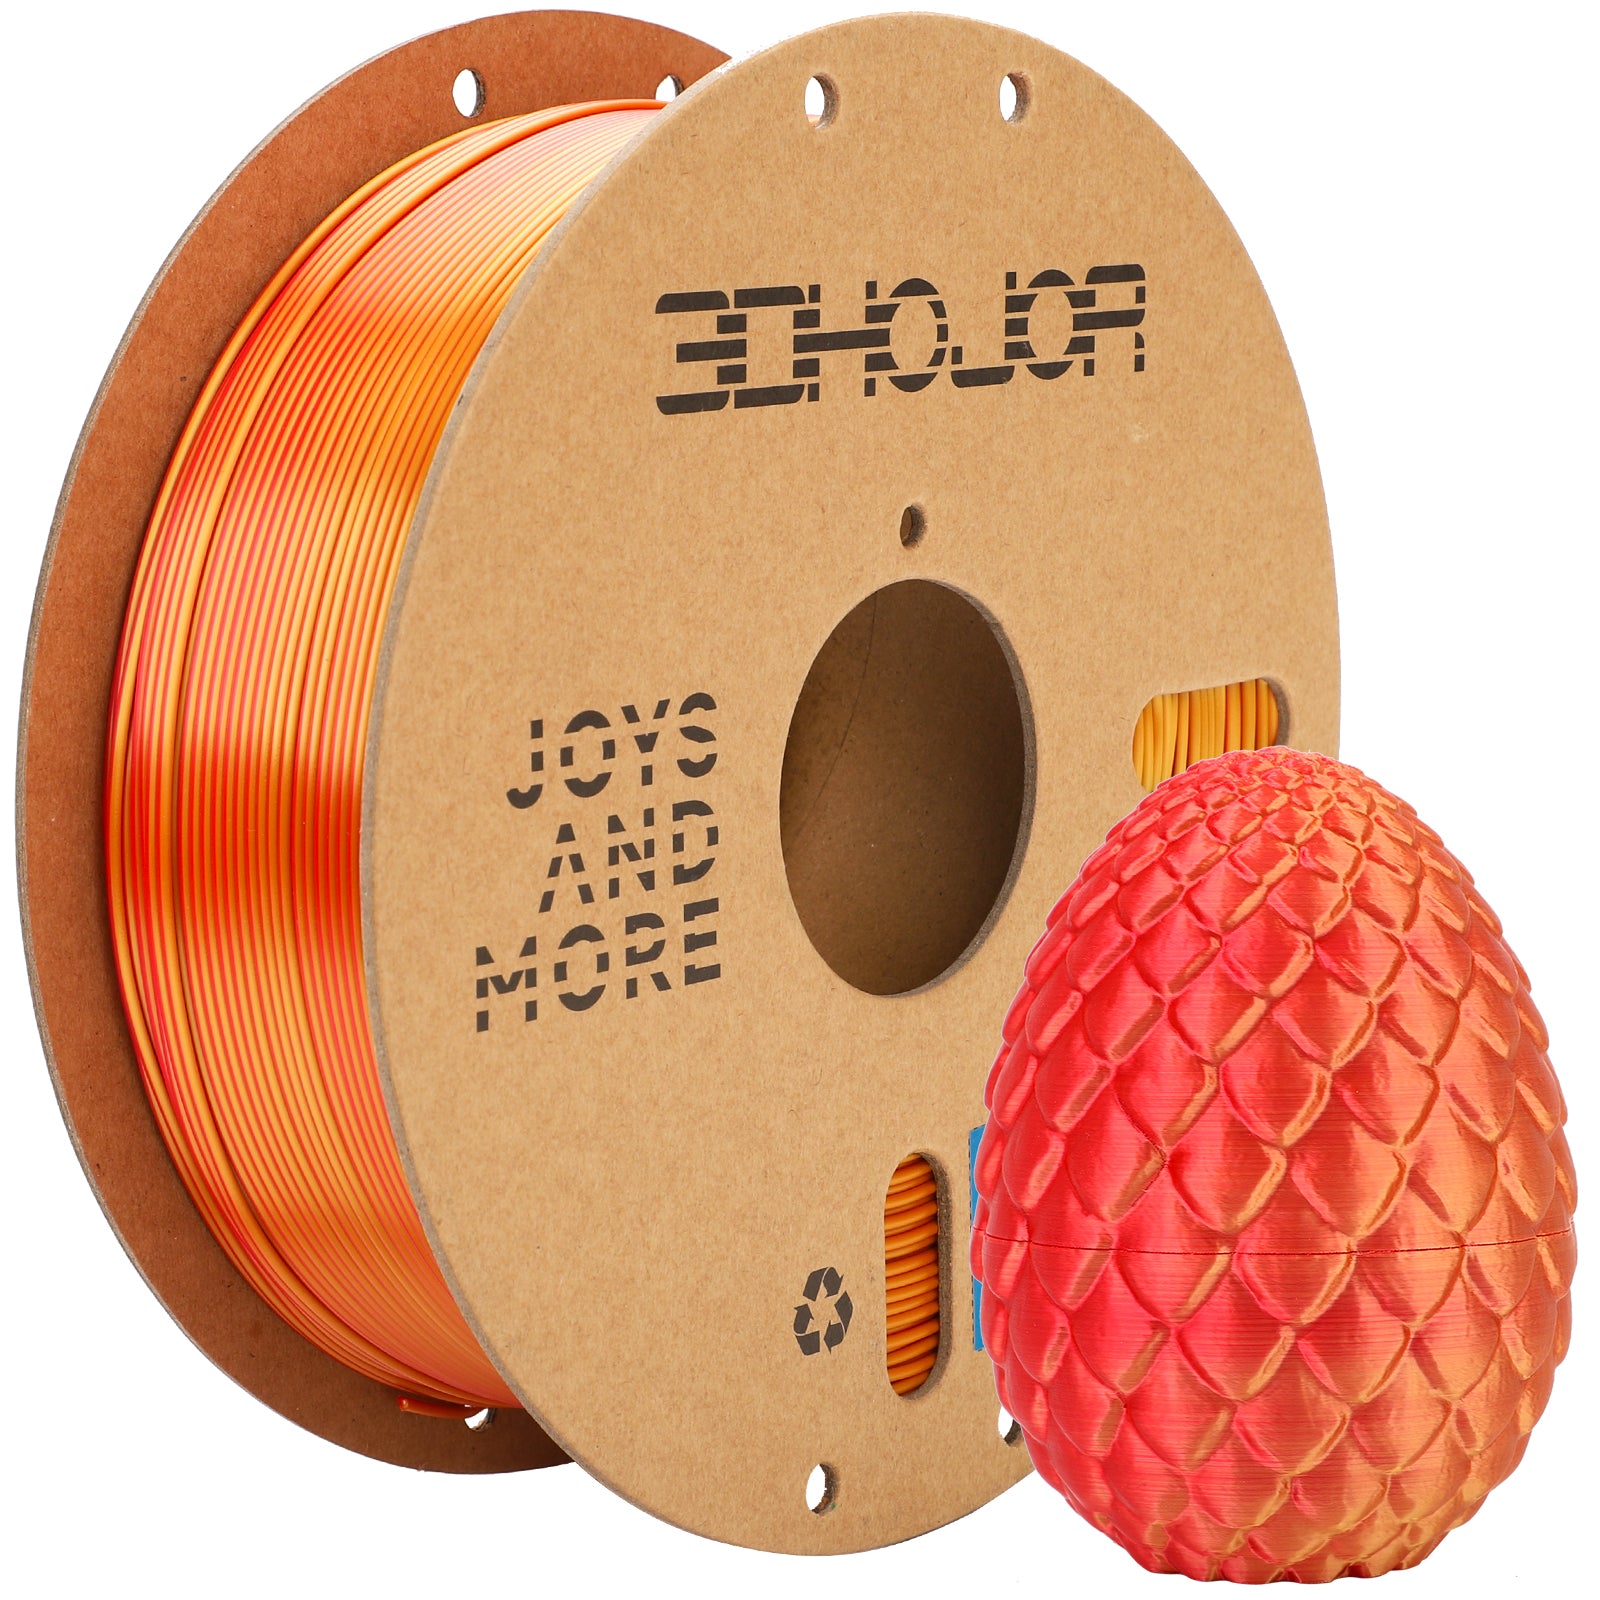 Silk PLA Filament 1.75mm Red Gold Dual Color PLA 3D Printer Filament 2 in 1 Coextrusion 1KG Spool(2.2lbs) 3D Printing Filament Dimensional Accuracy /- 0.03mm Fits for Most FDM 3D Printers